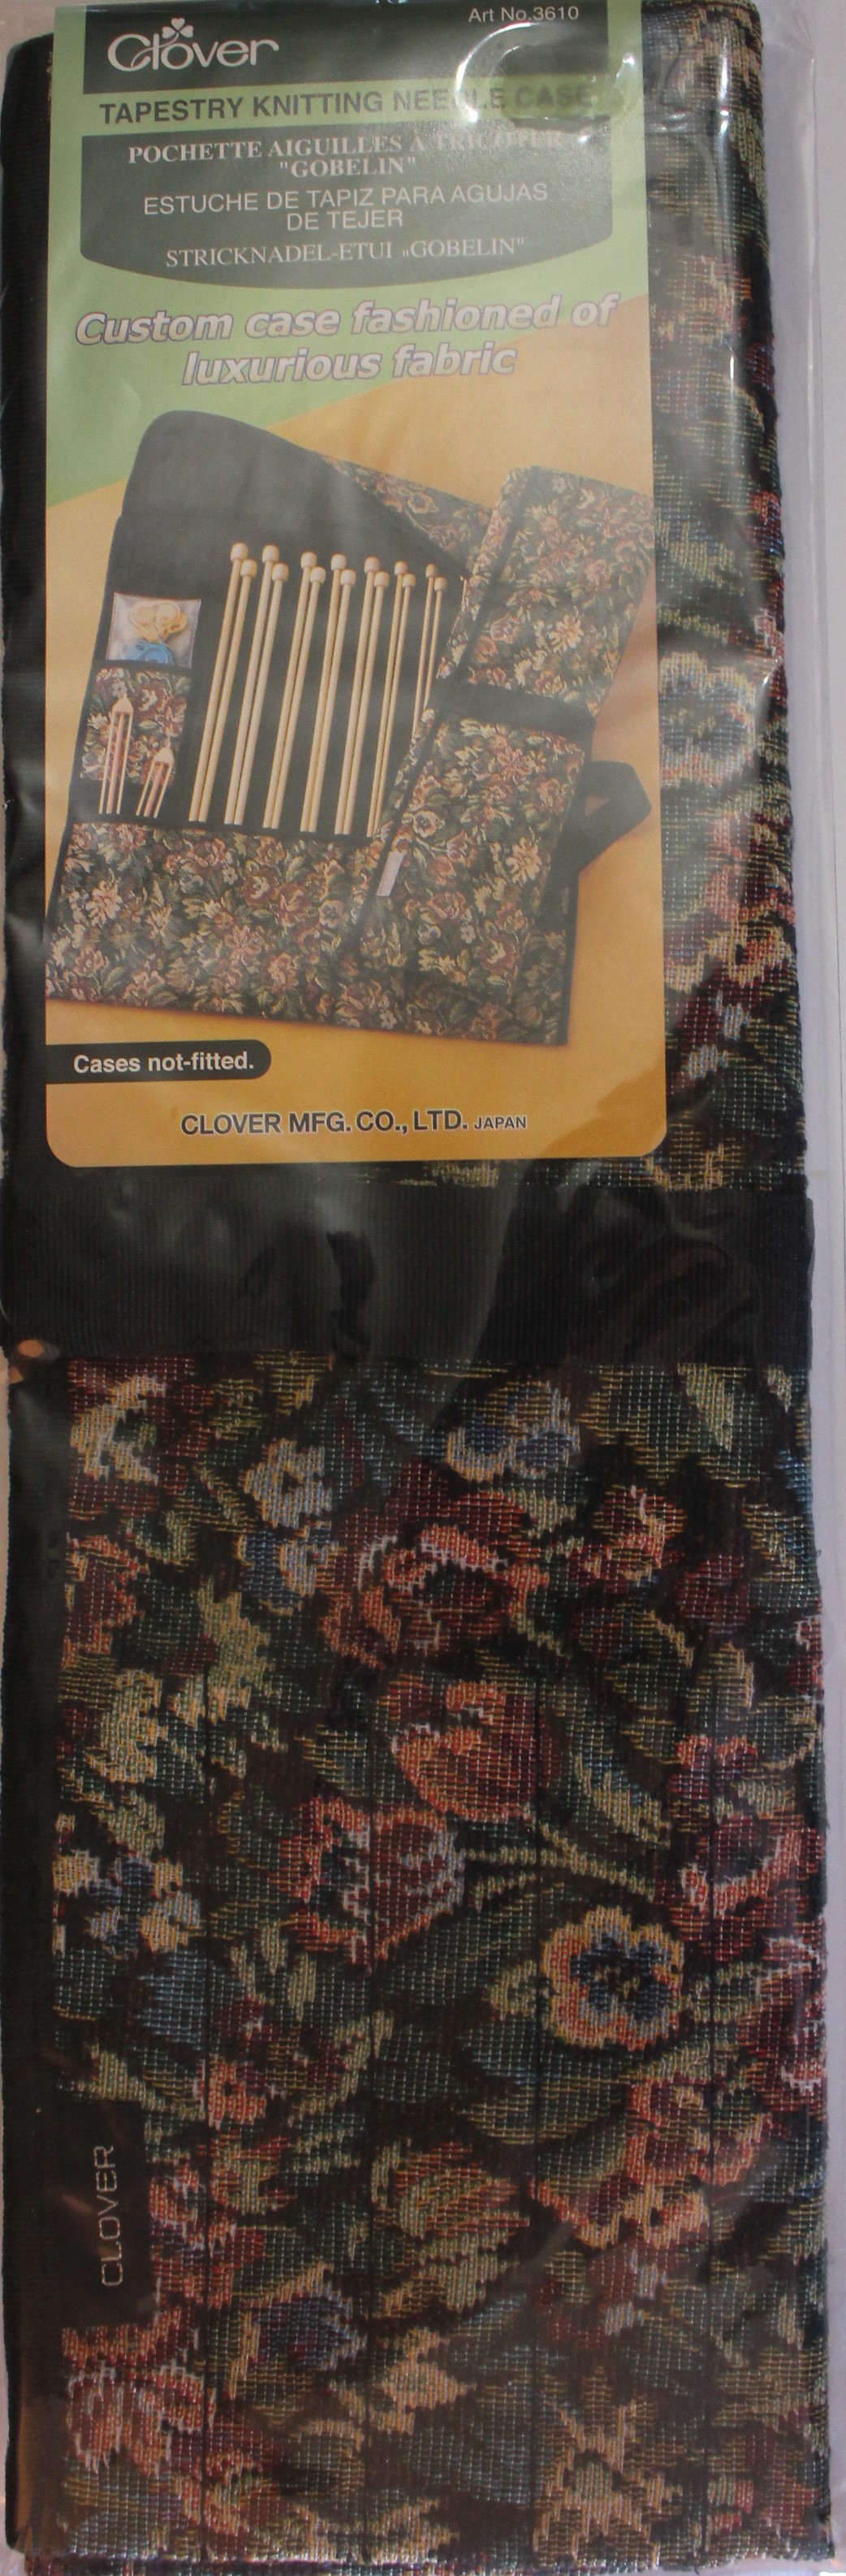 Clover Tapestry Knitting Needle Case